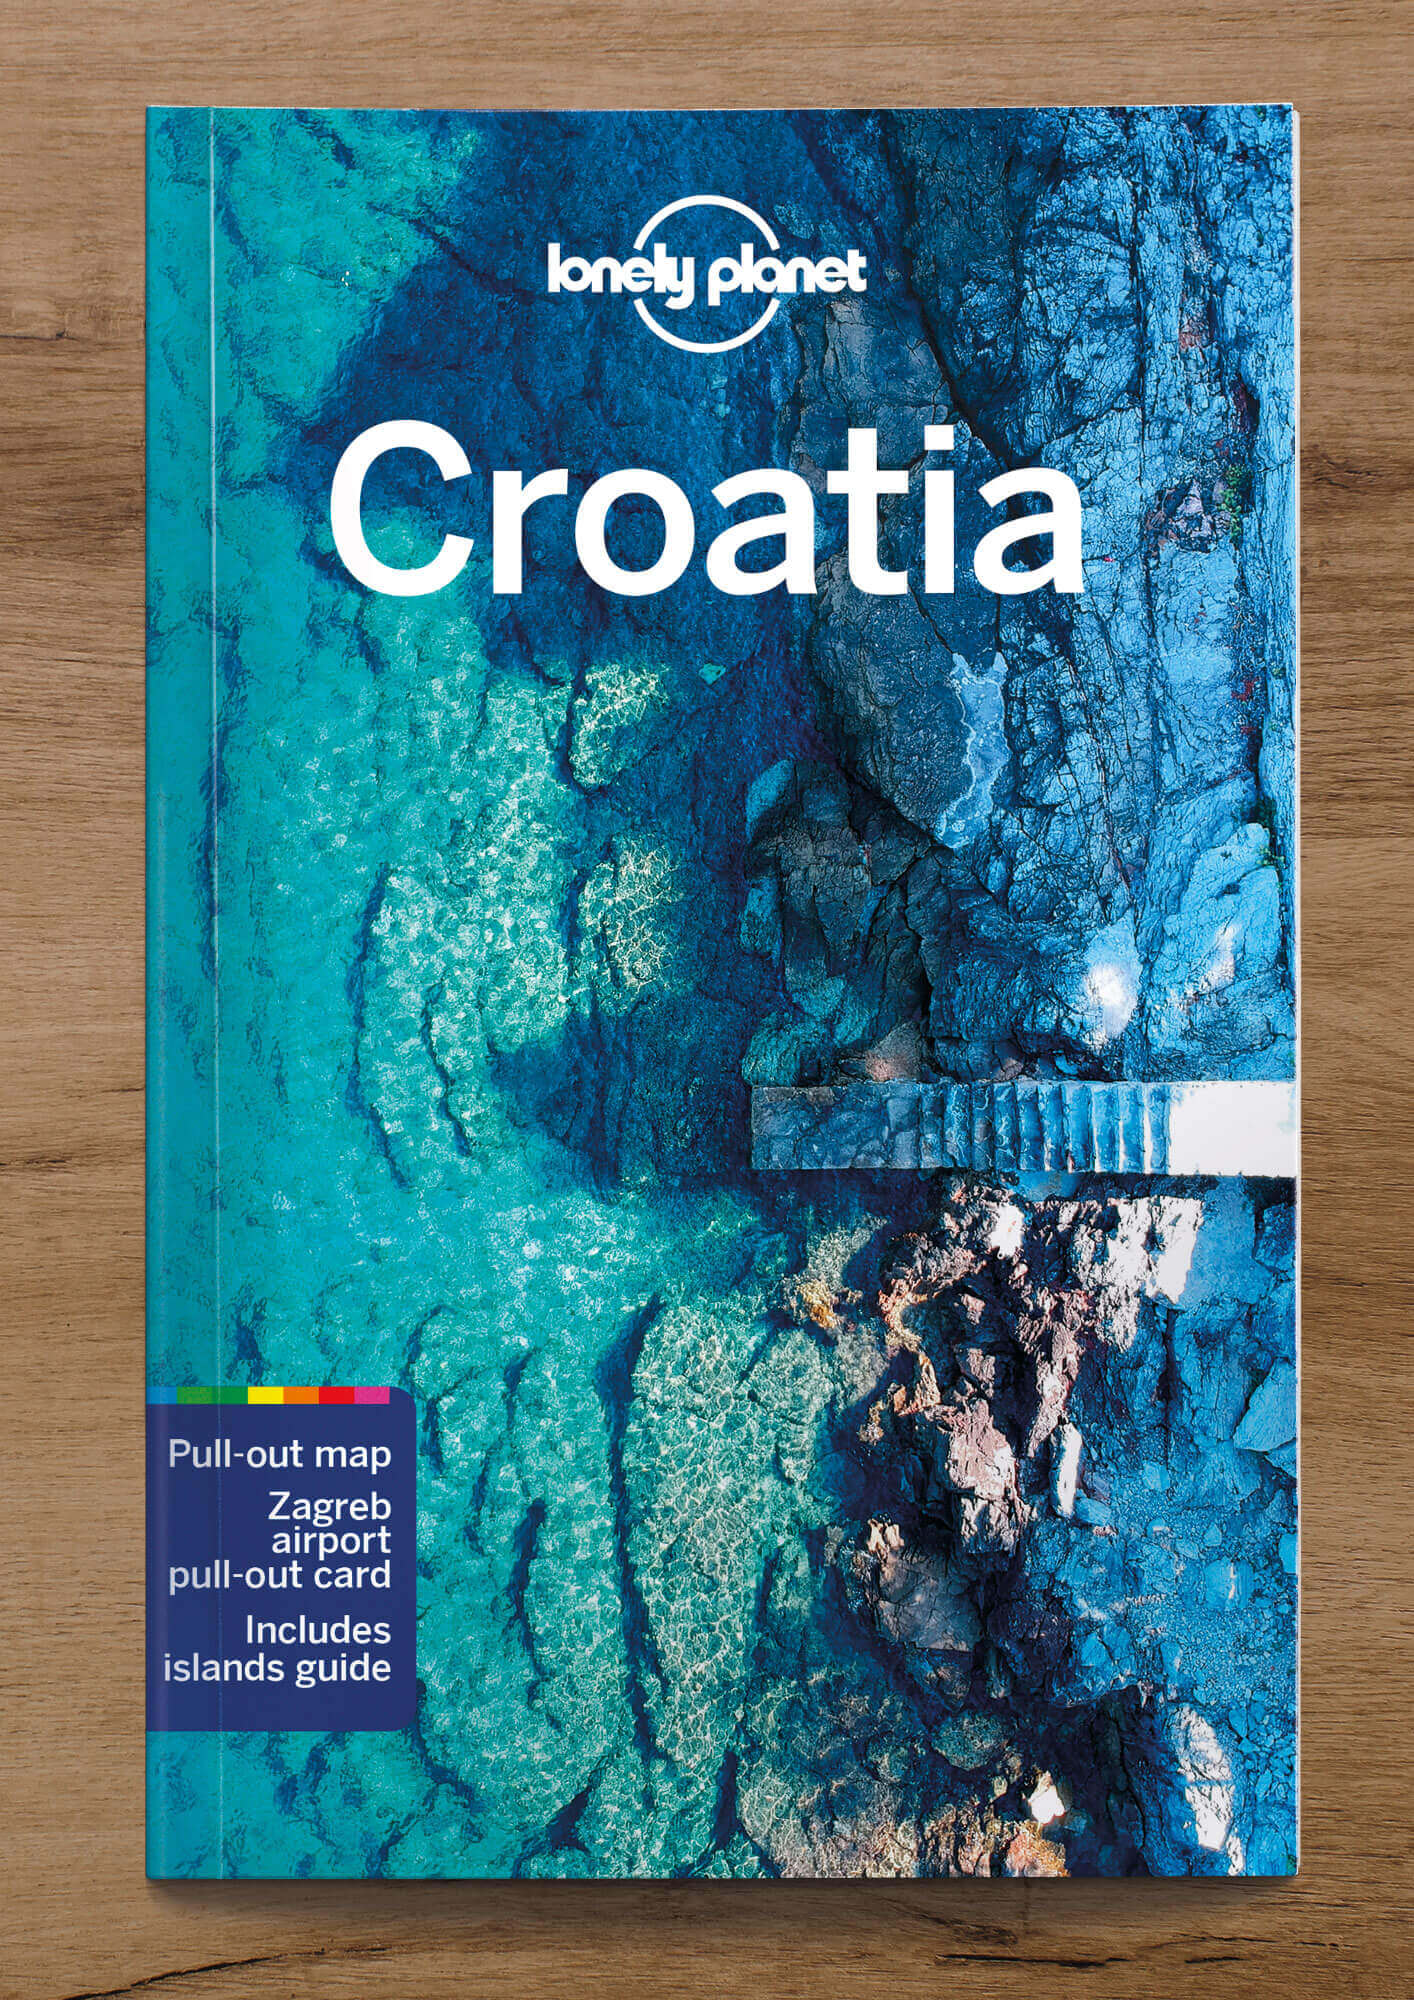  Bestselling Lonelyplanet ebook bundle - Croatia